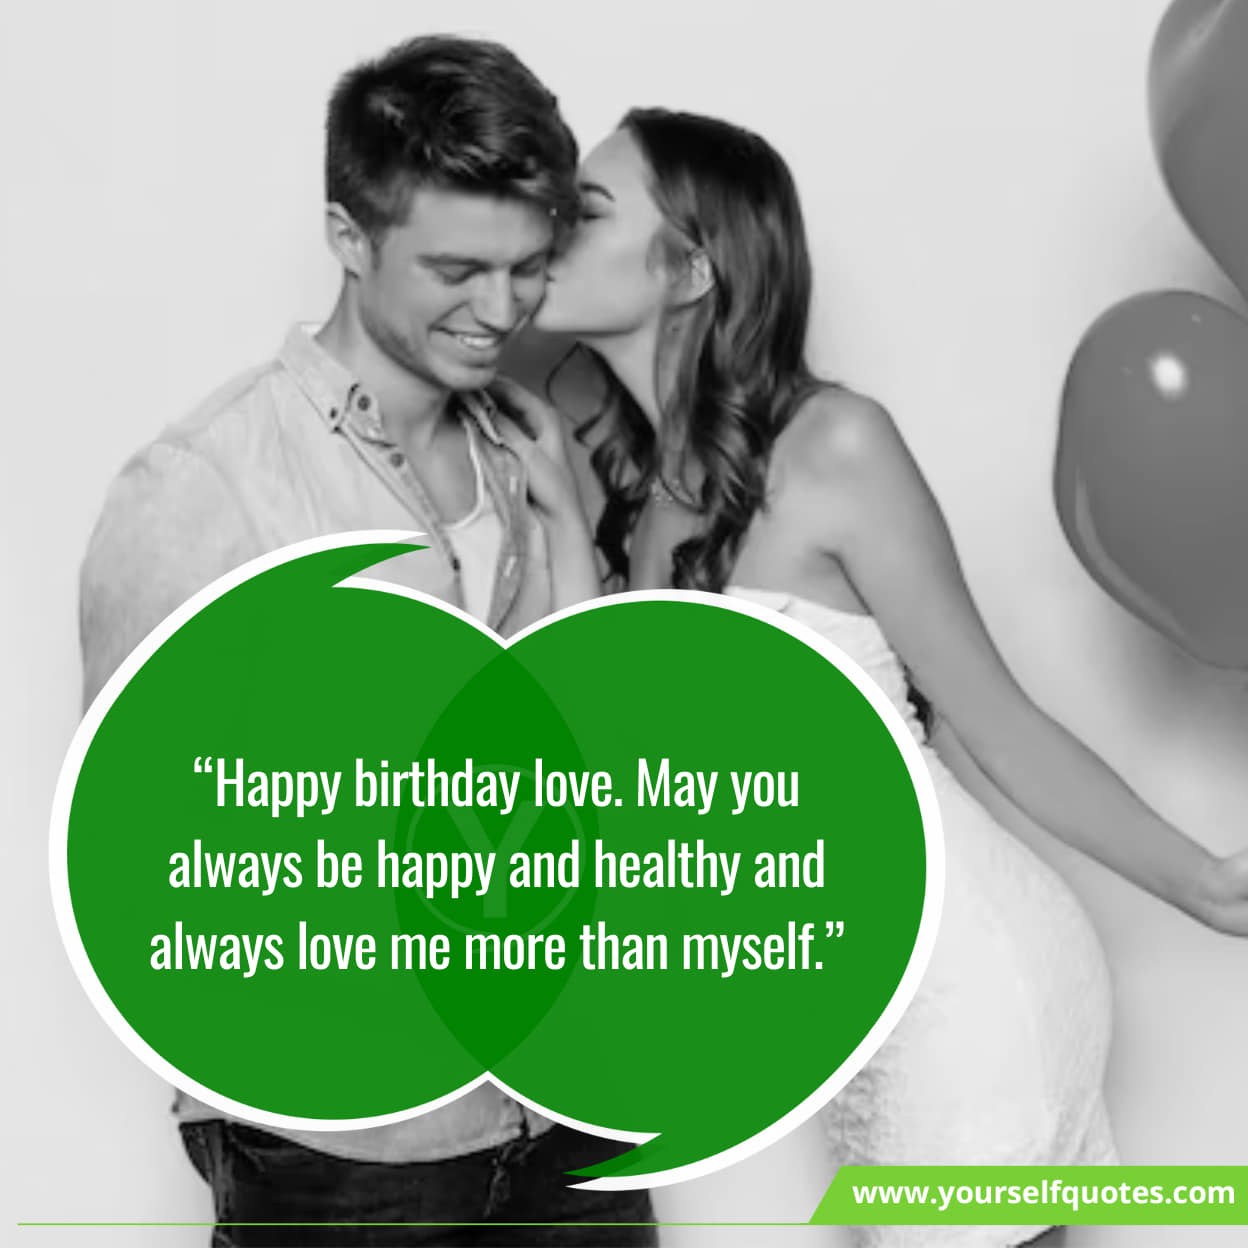 Cute birthday messages for boyfriend